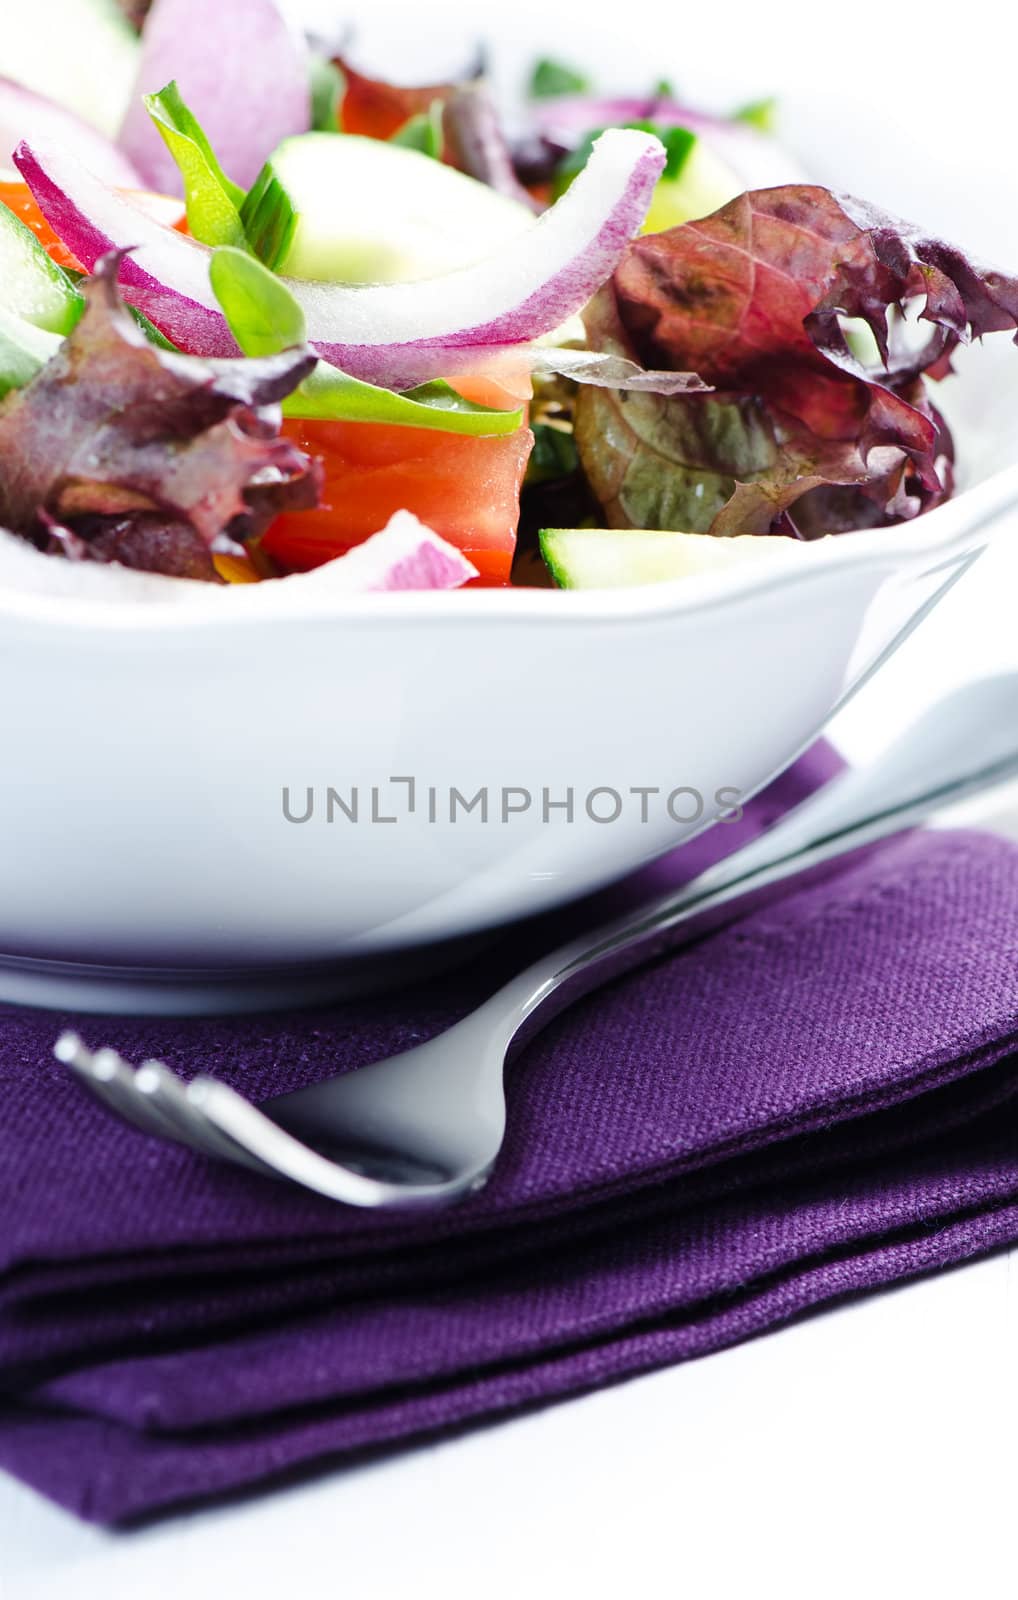 Salad on a purple napkin